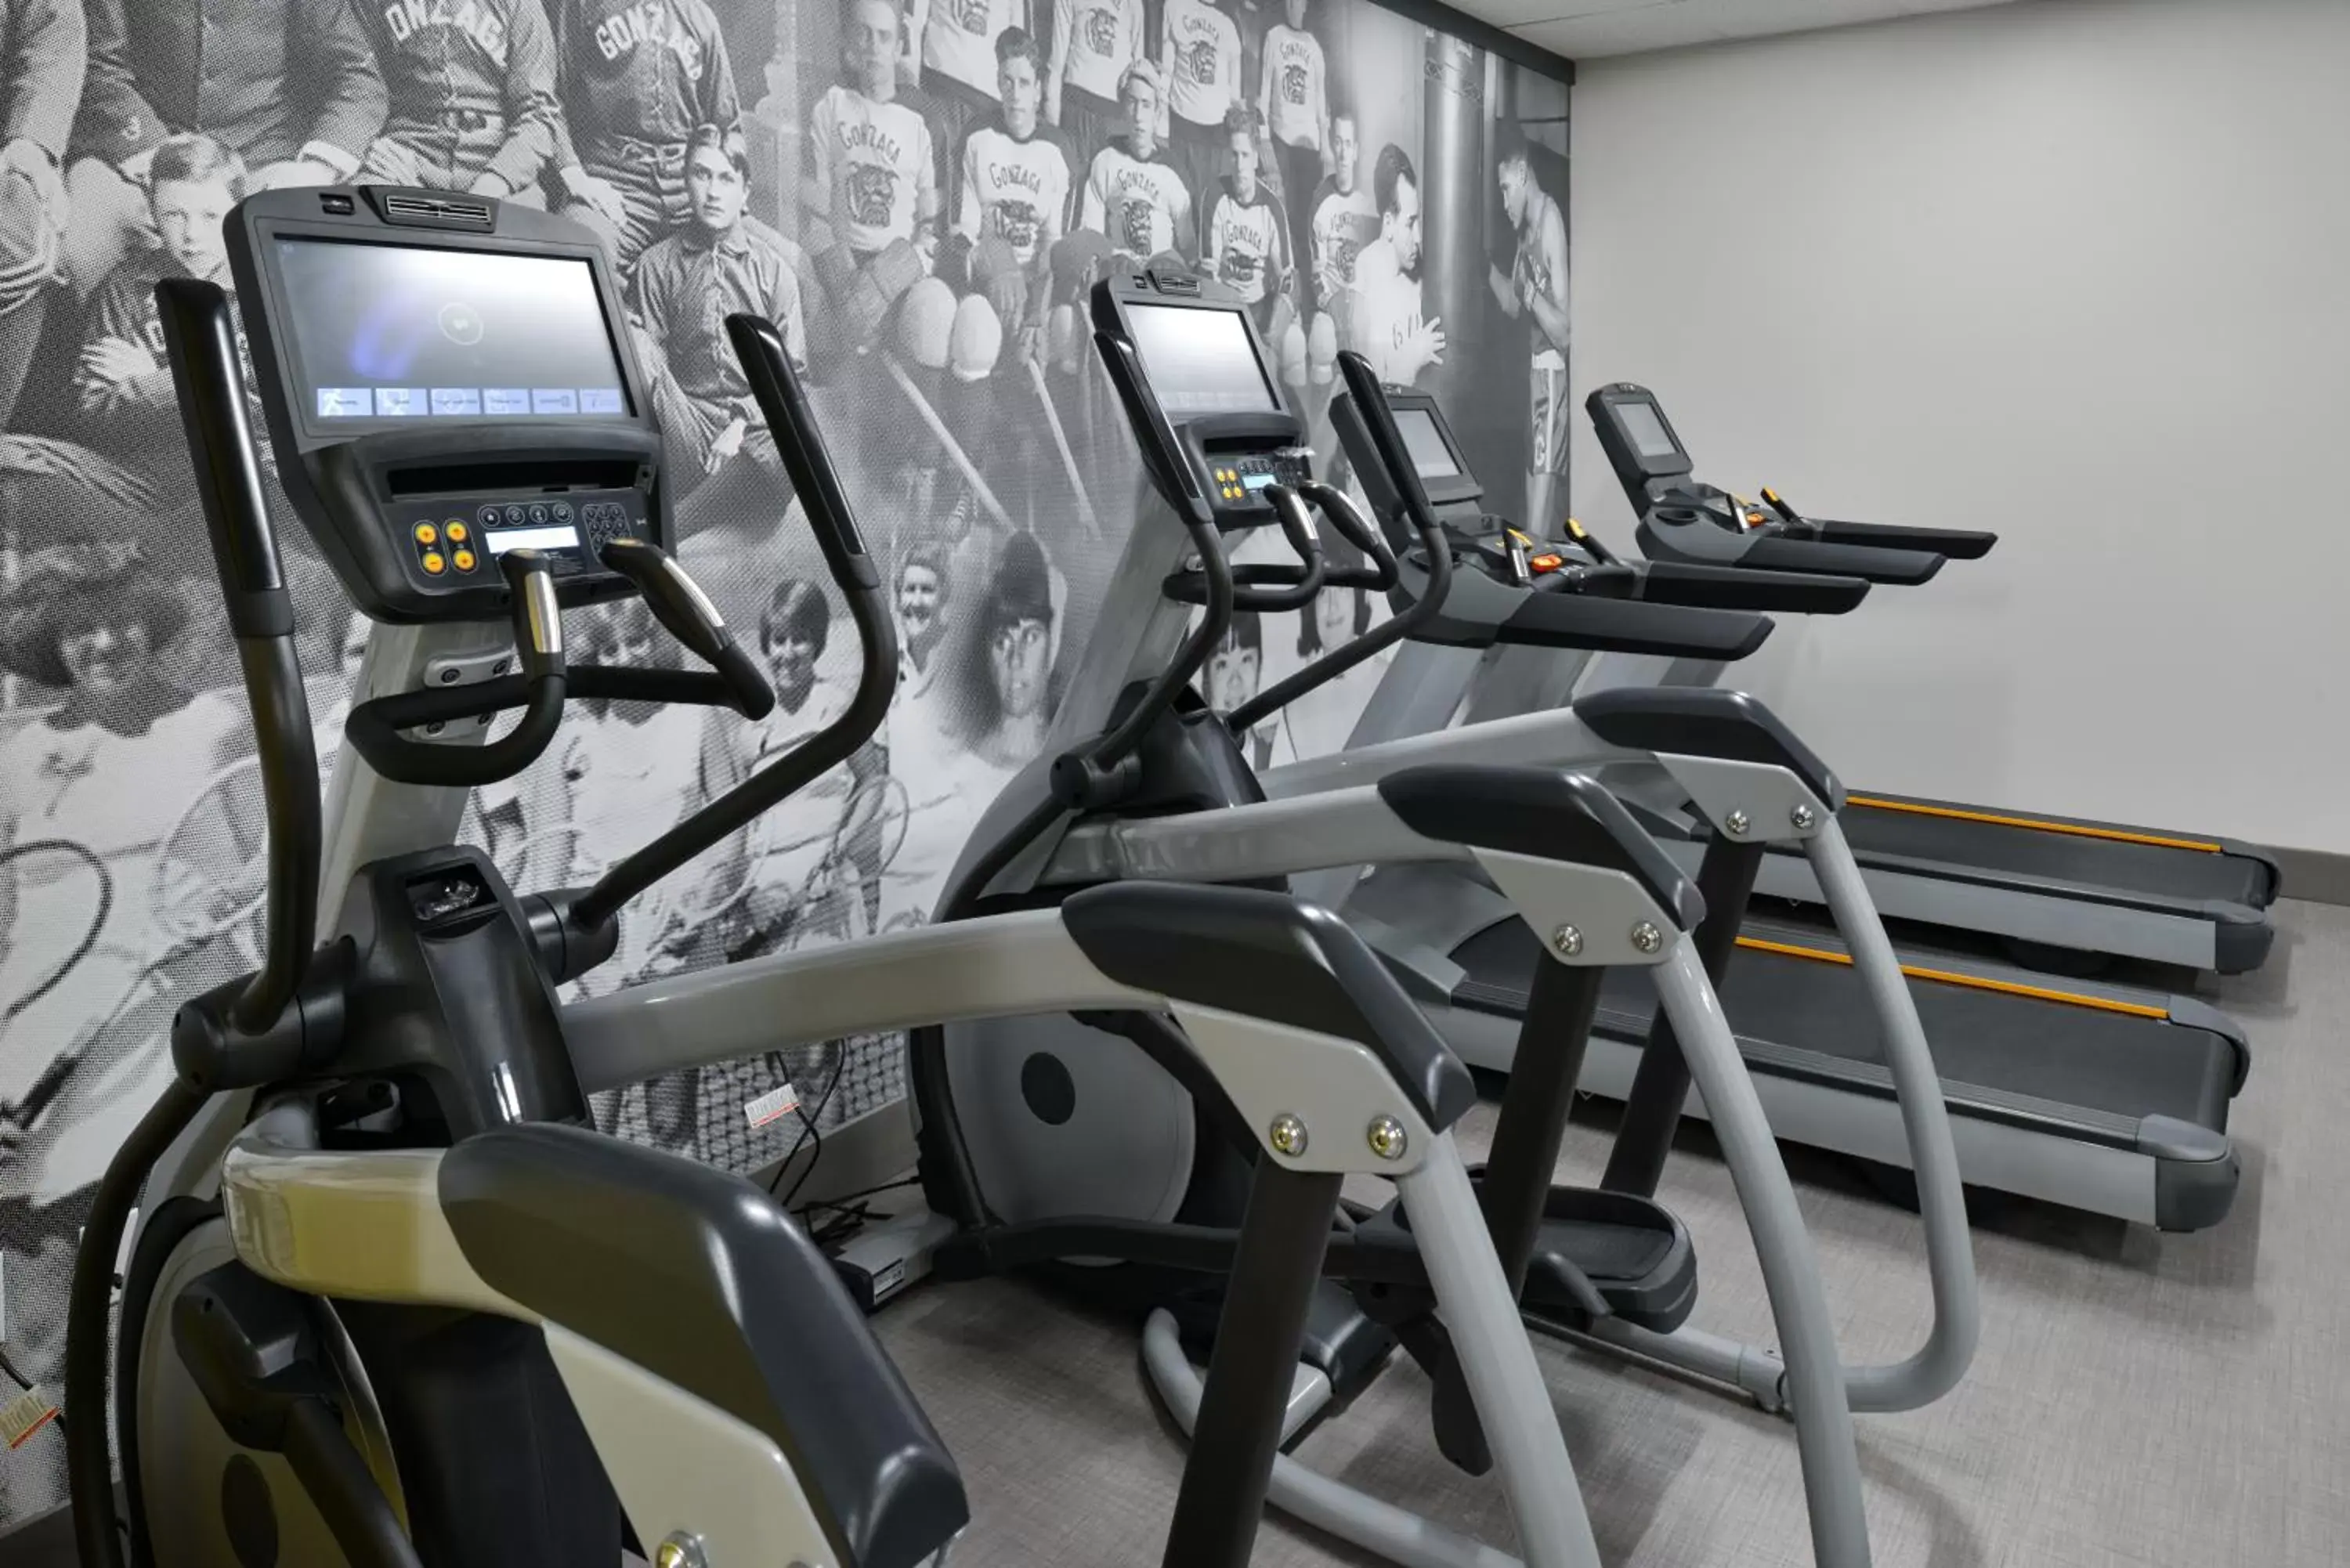 Fitness centre/facilities, Fitness Center/Facilities in Hotel Indigo Spokane Downtown, an IHG Hotel